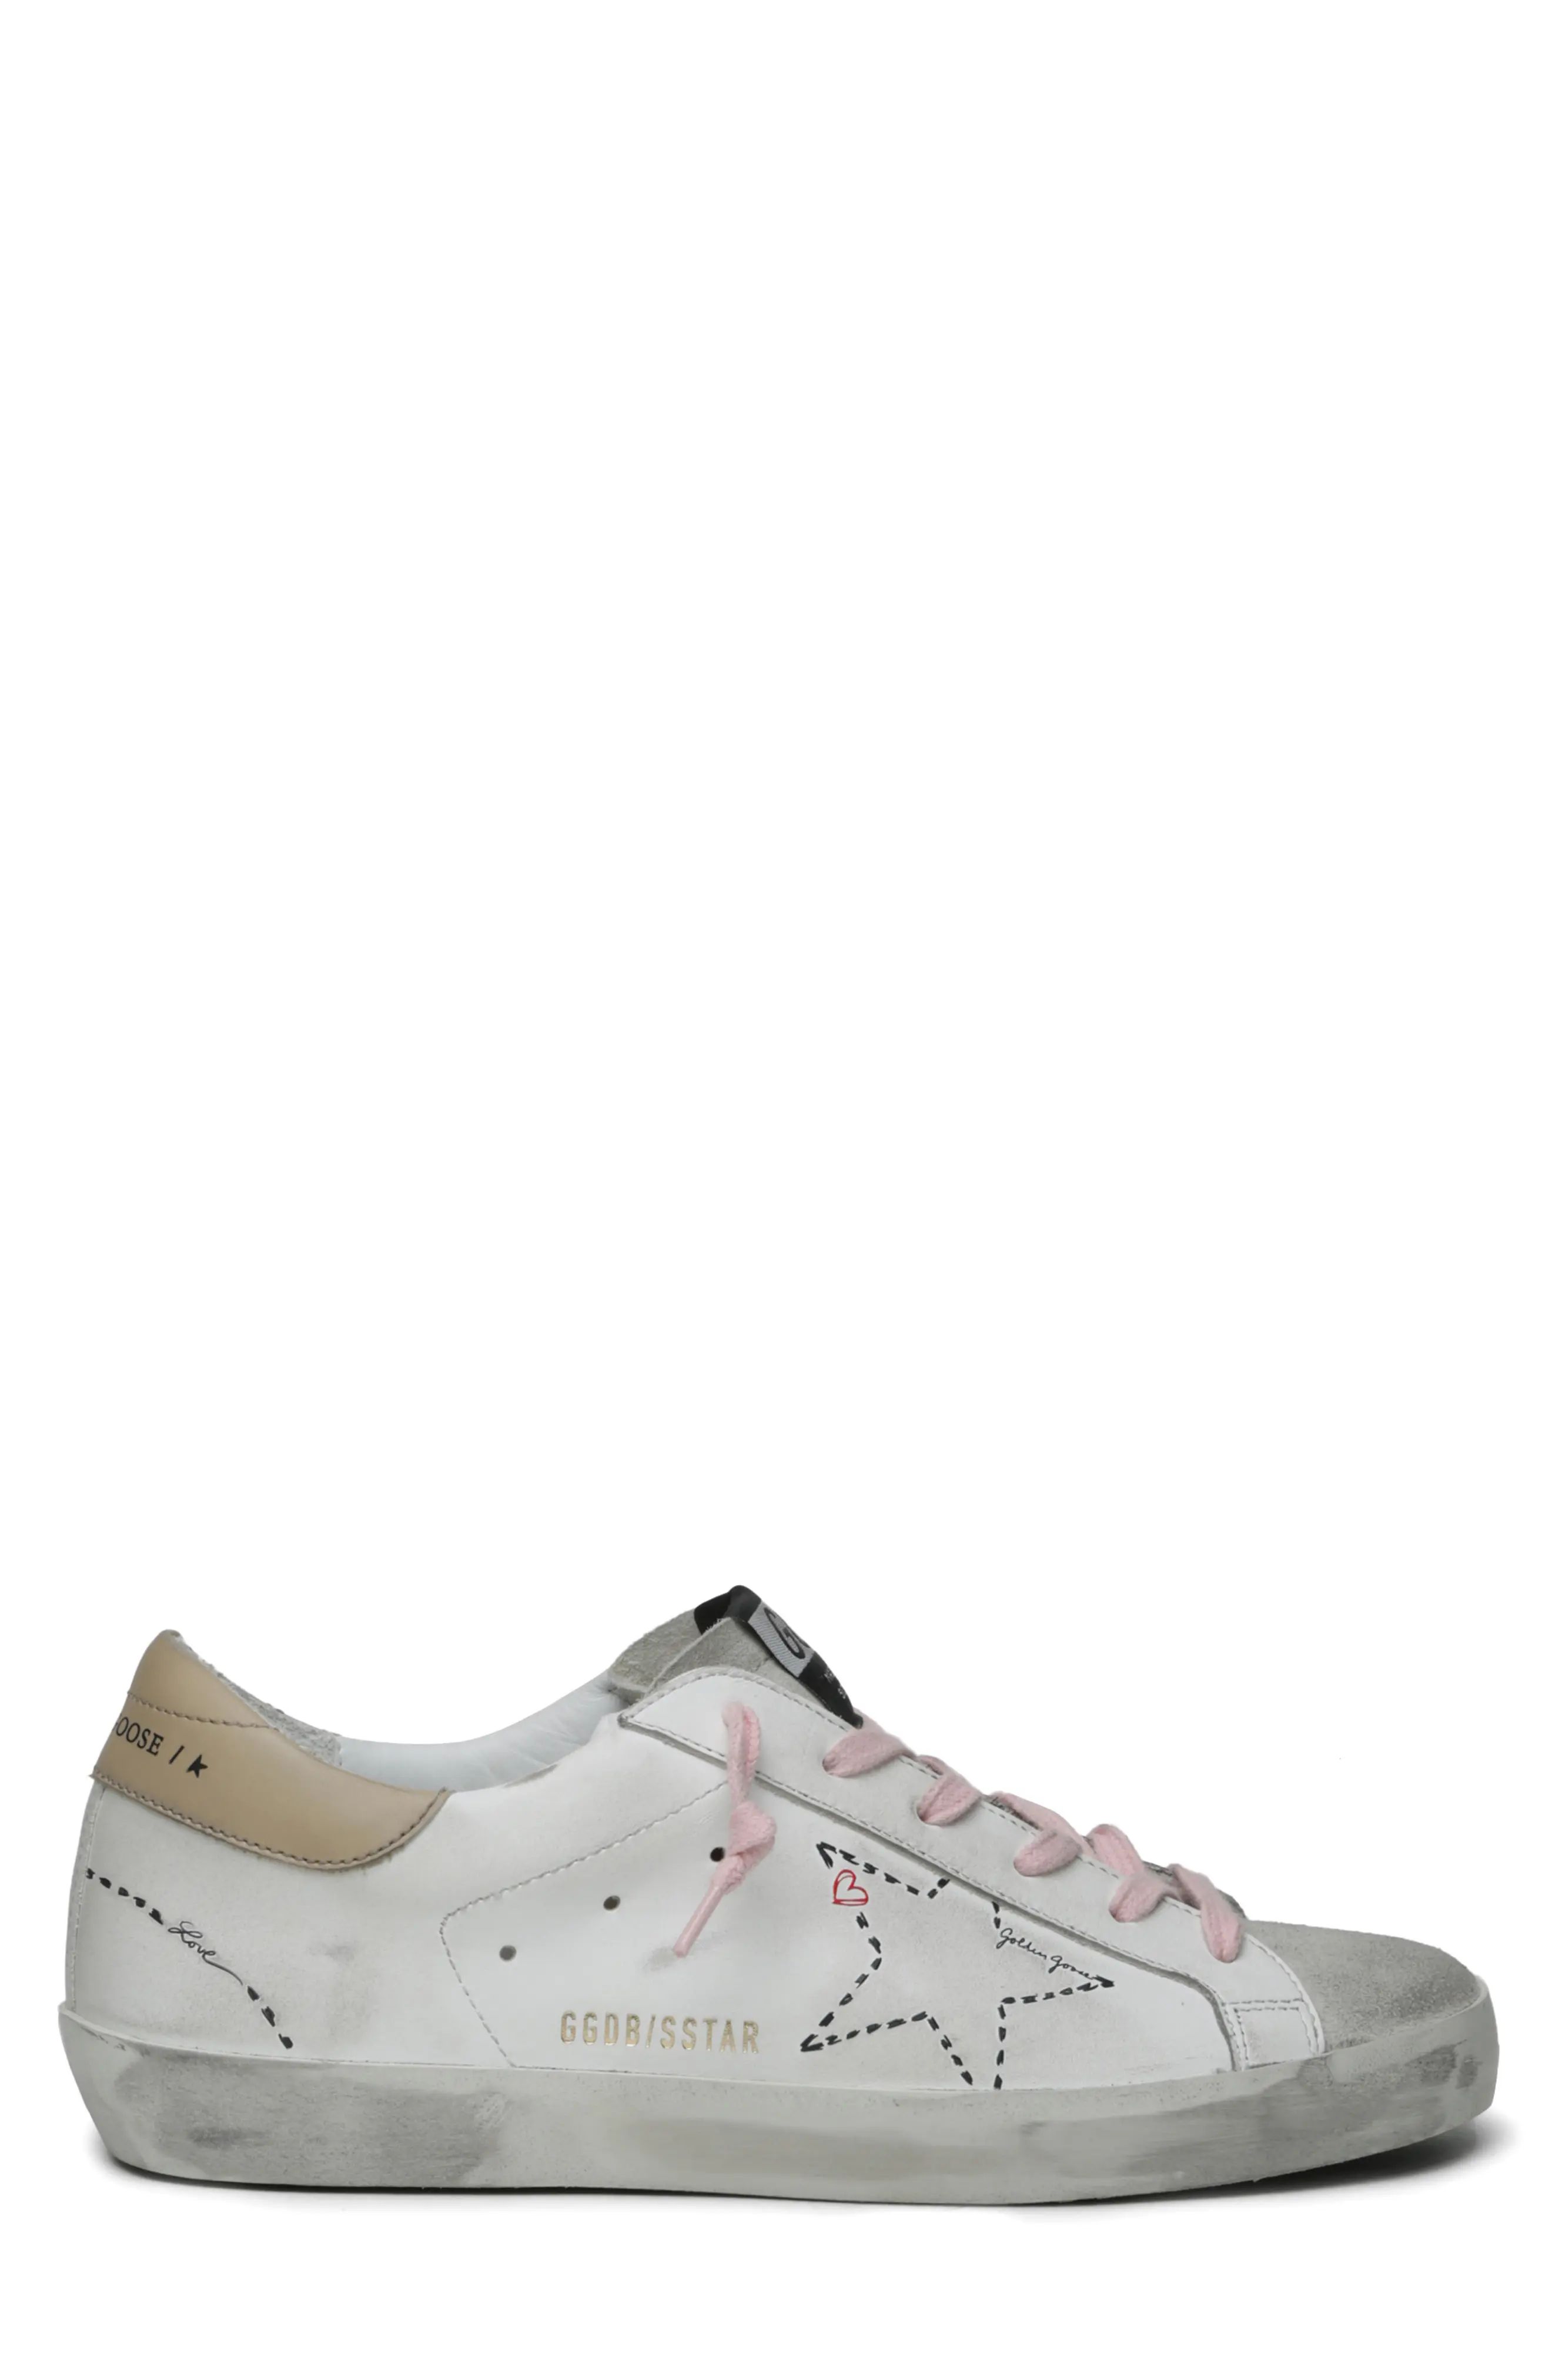 Women's Golden Goose Super-Star Low Top Sneaker, Size 8US - White | Nordstrom